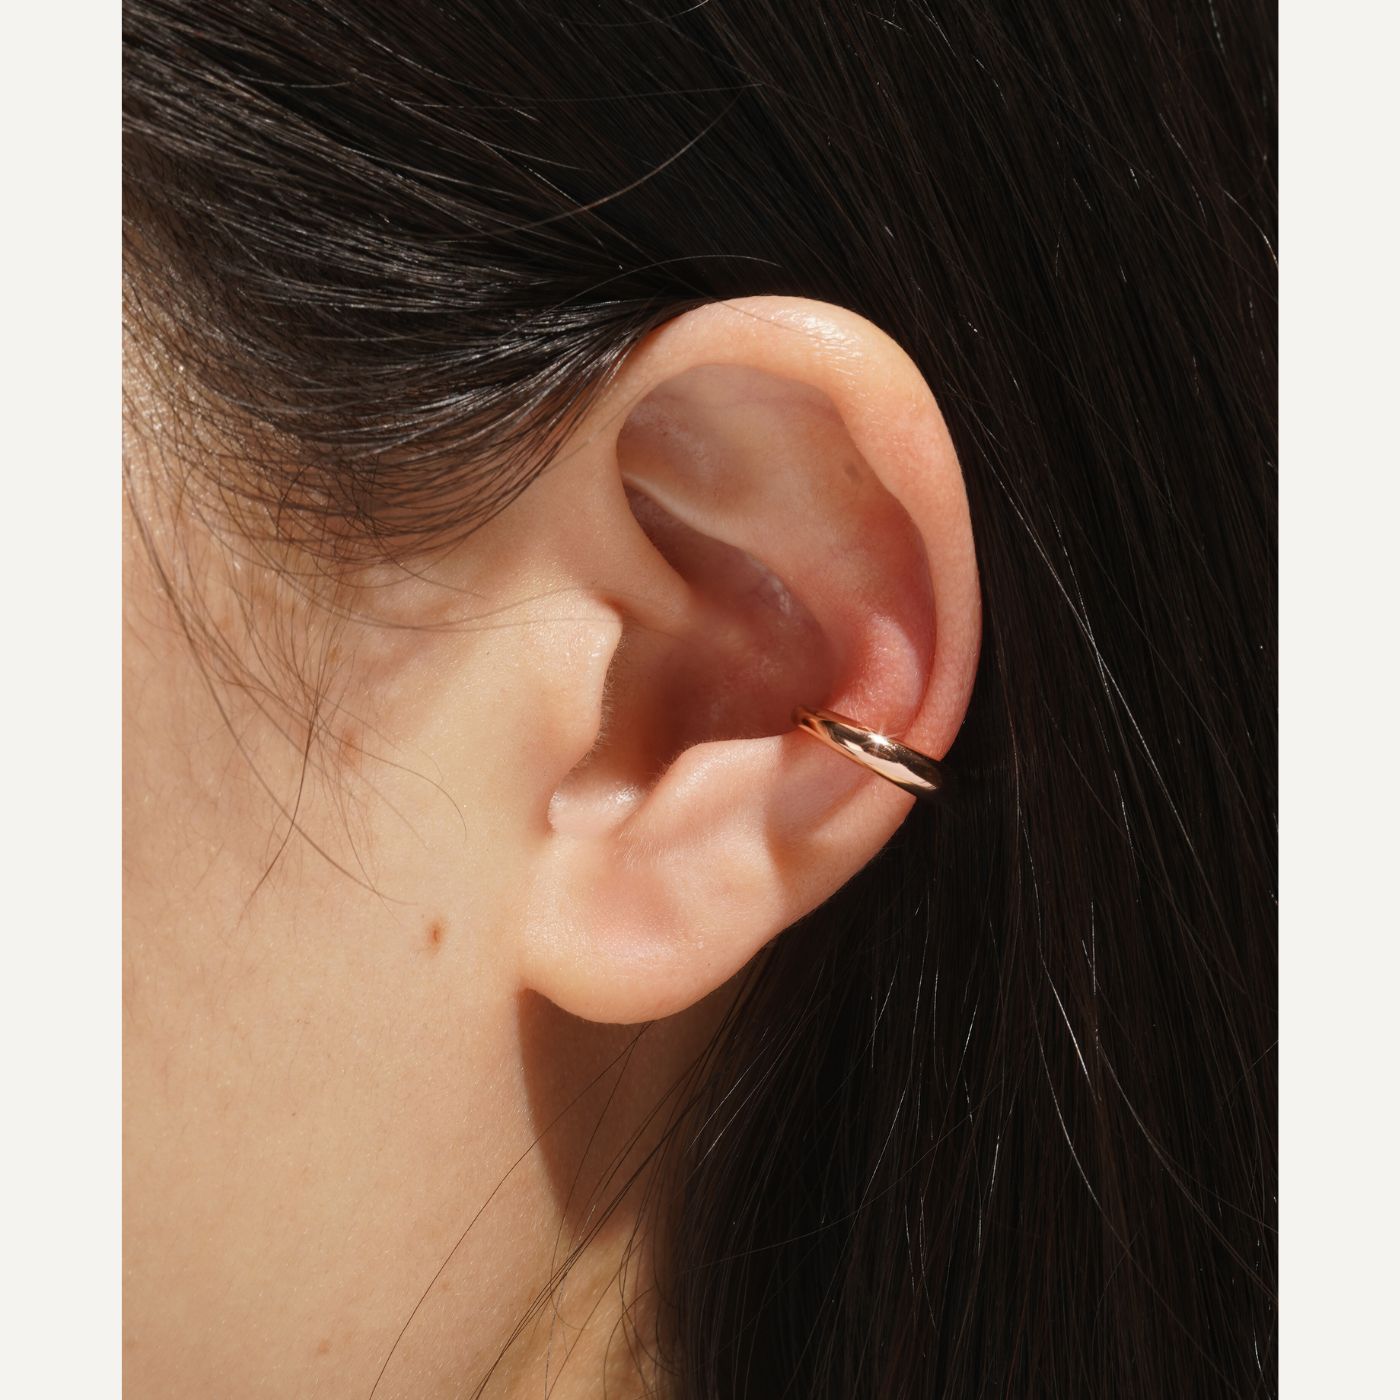 ear cuff or rose. Faux piercing conch